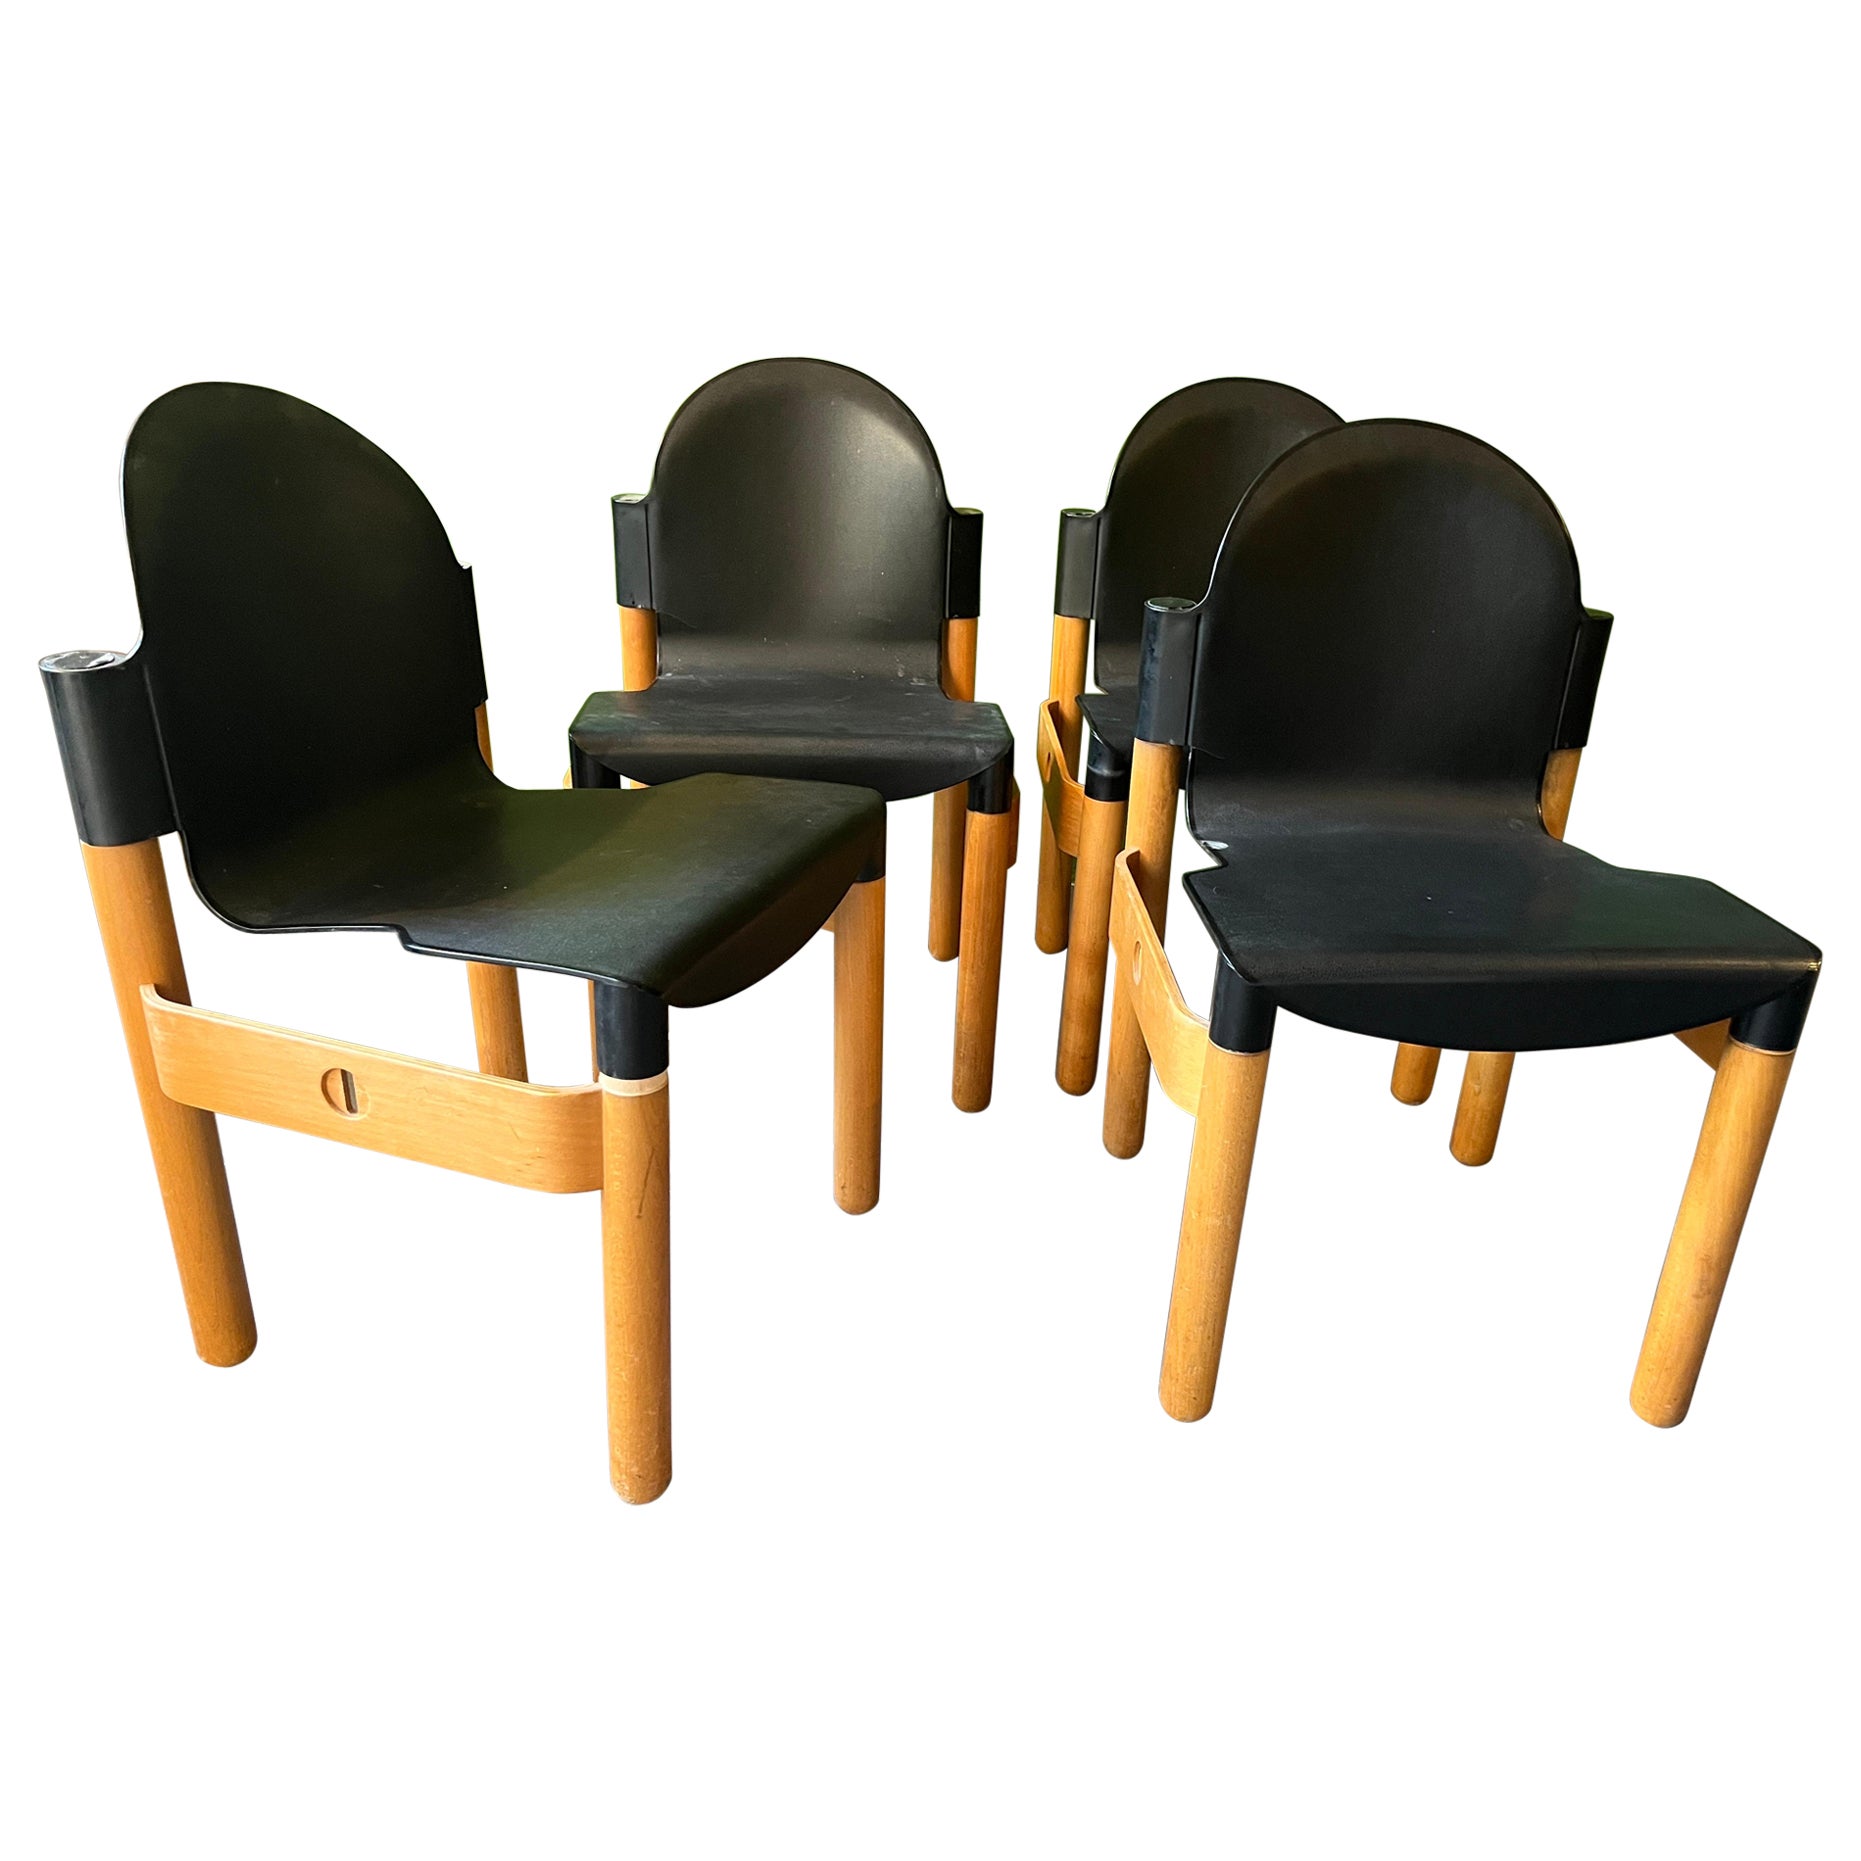 Gerd Lange Dining Room Chairs